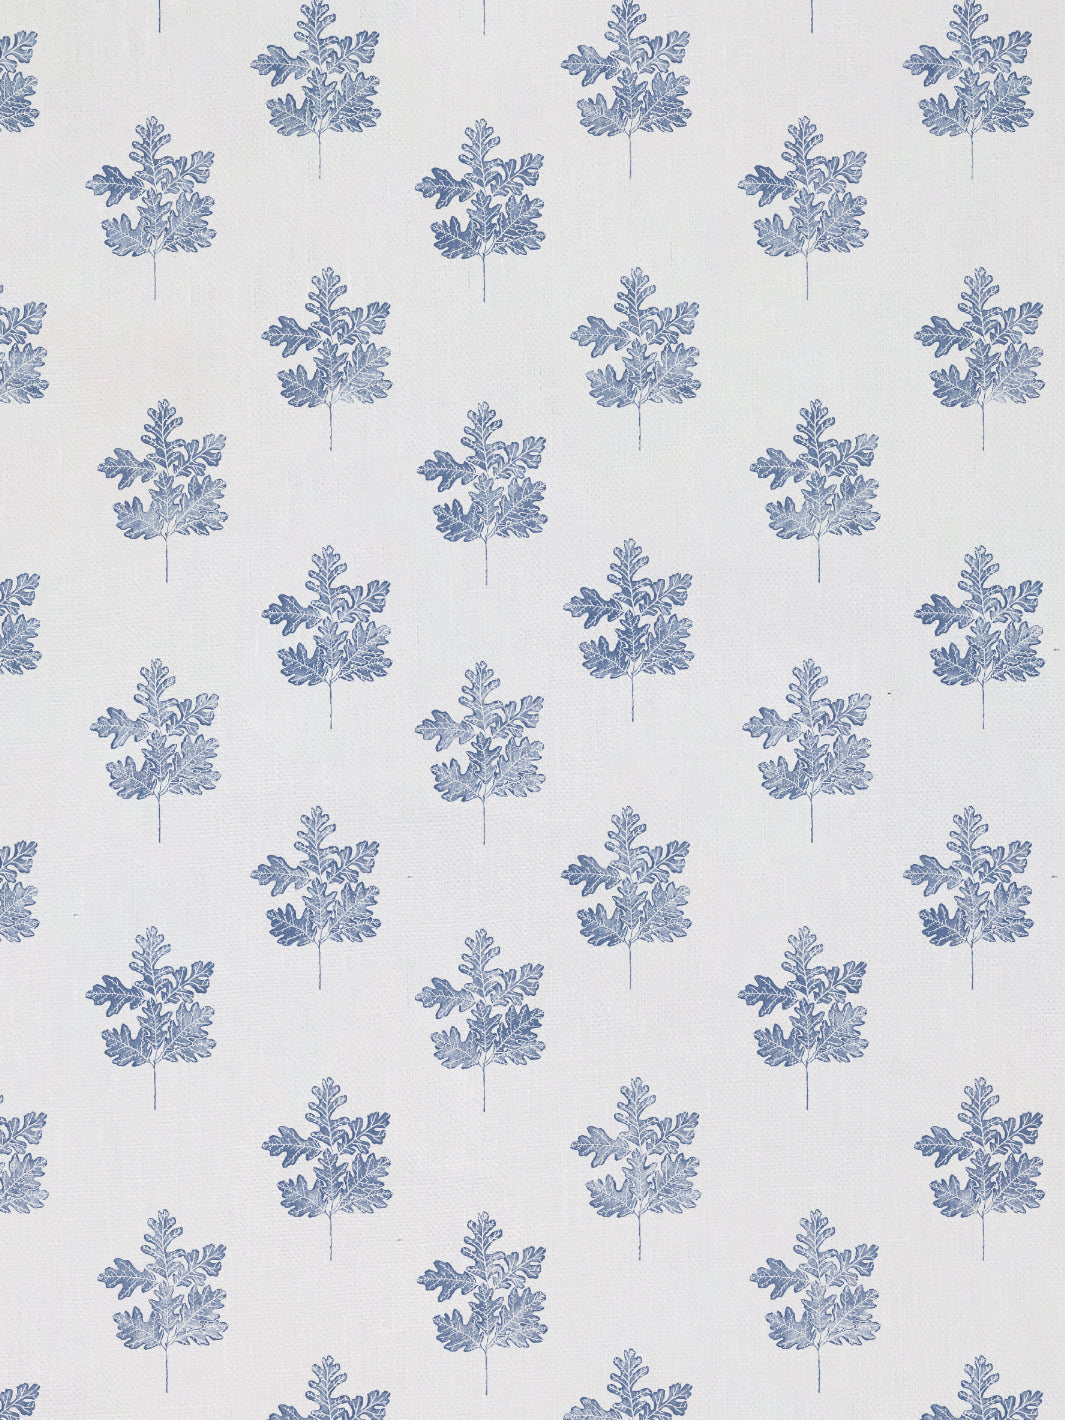 'Valley Oak Leaf' Linen Fabric by Nathan Turner - Blue